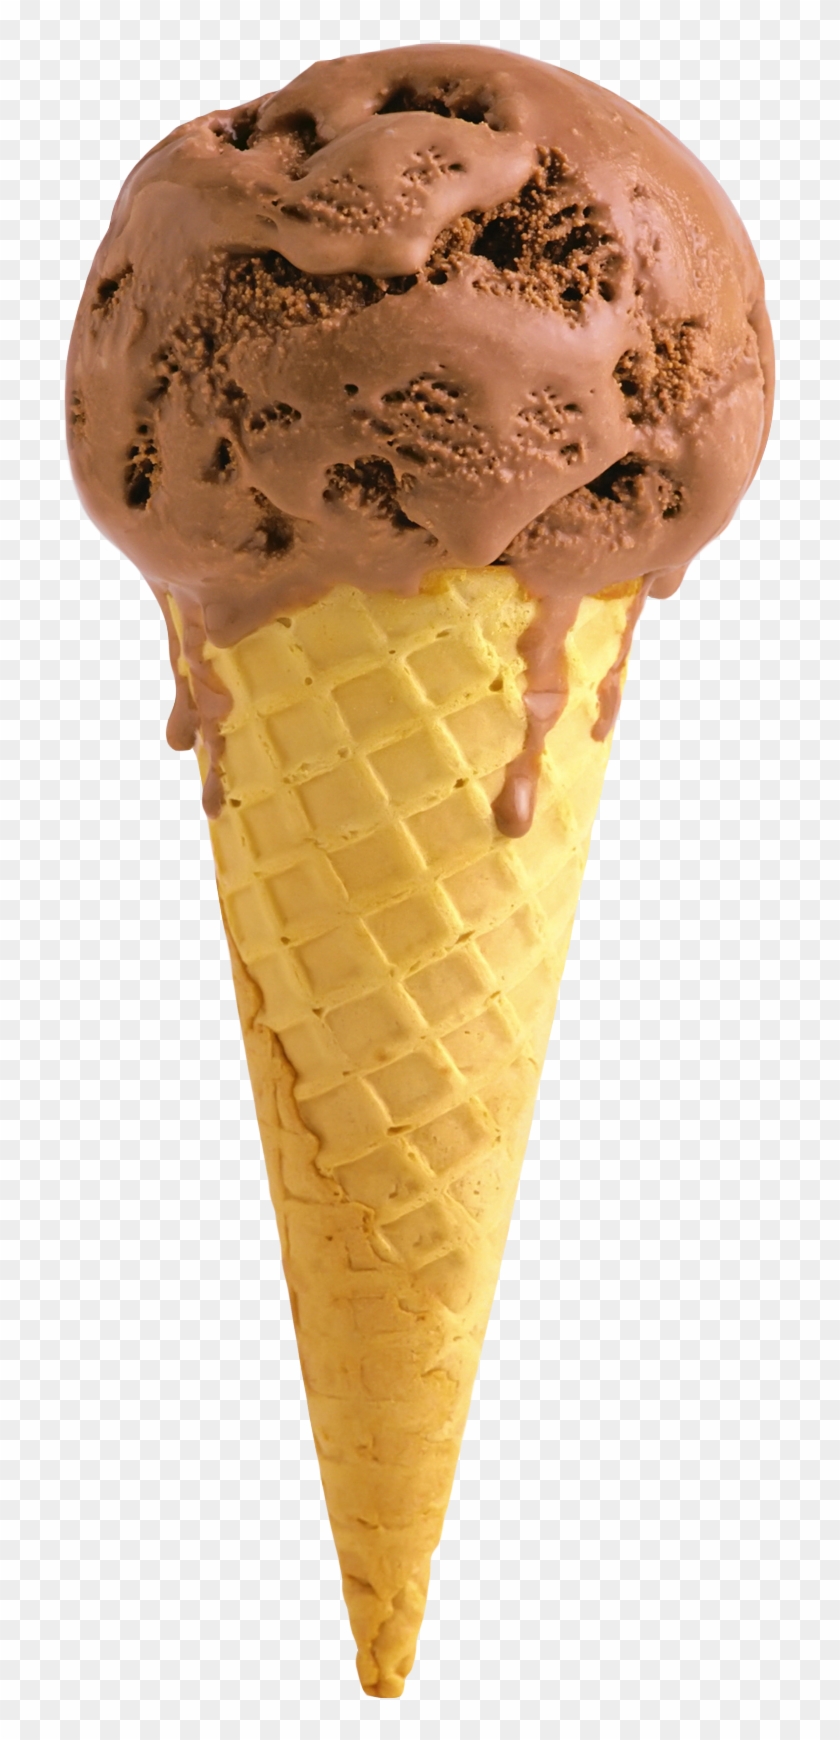 Ice Cream Cone Png Image - Ice Cream Cone Png #1084819